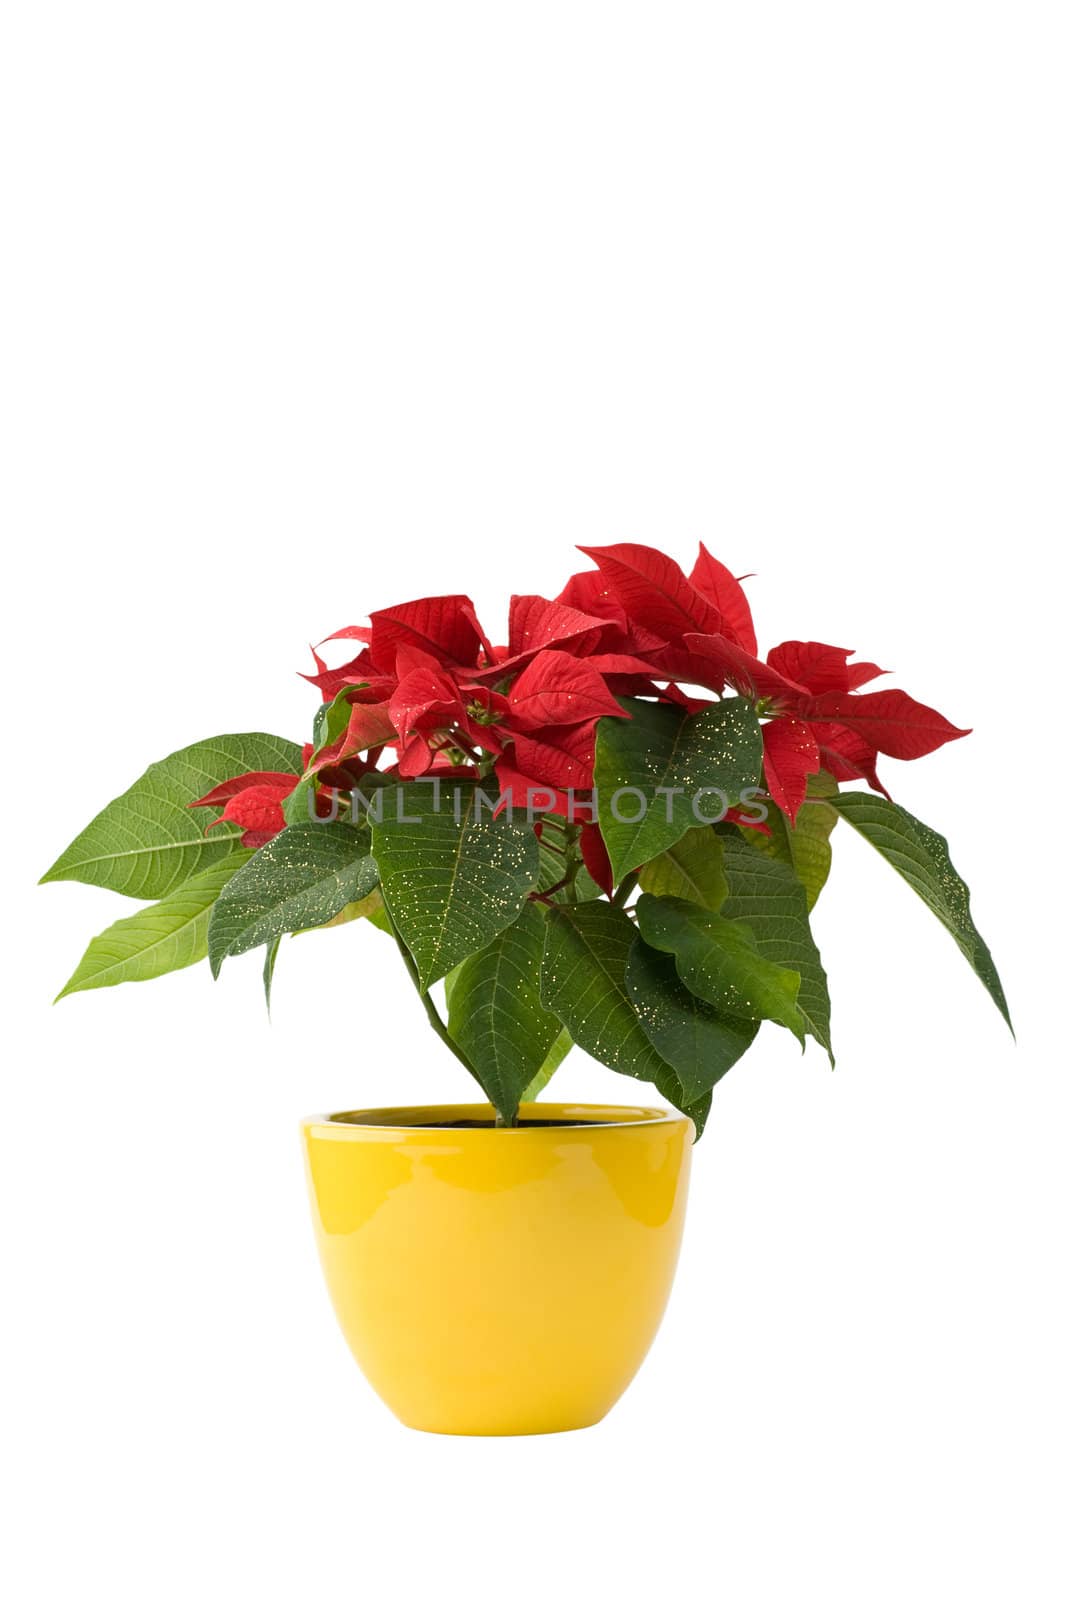 Beautiful Poinsettia - Christmas Star by rozhenyuk